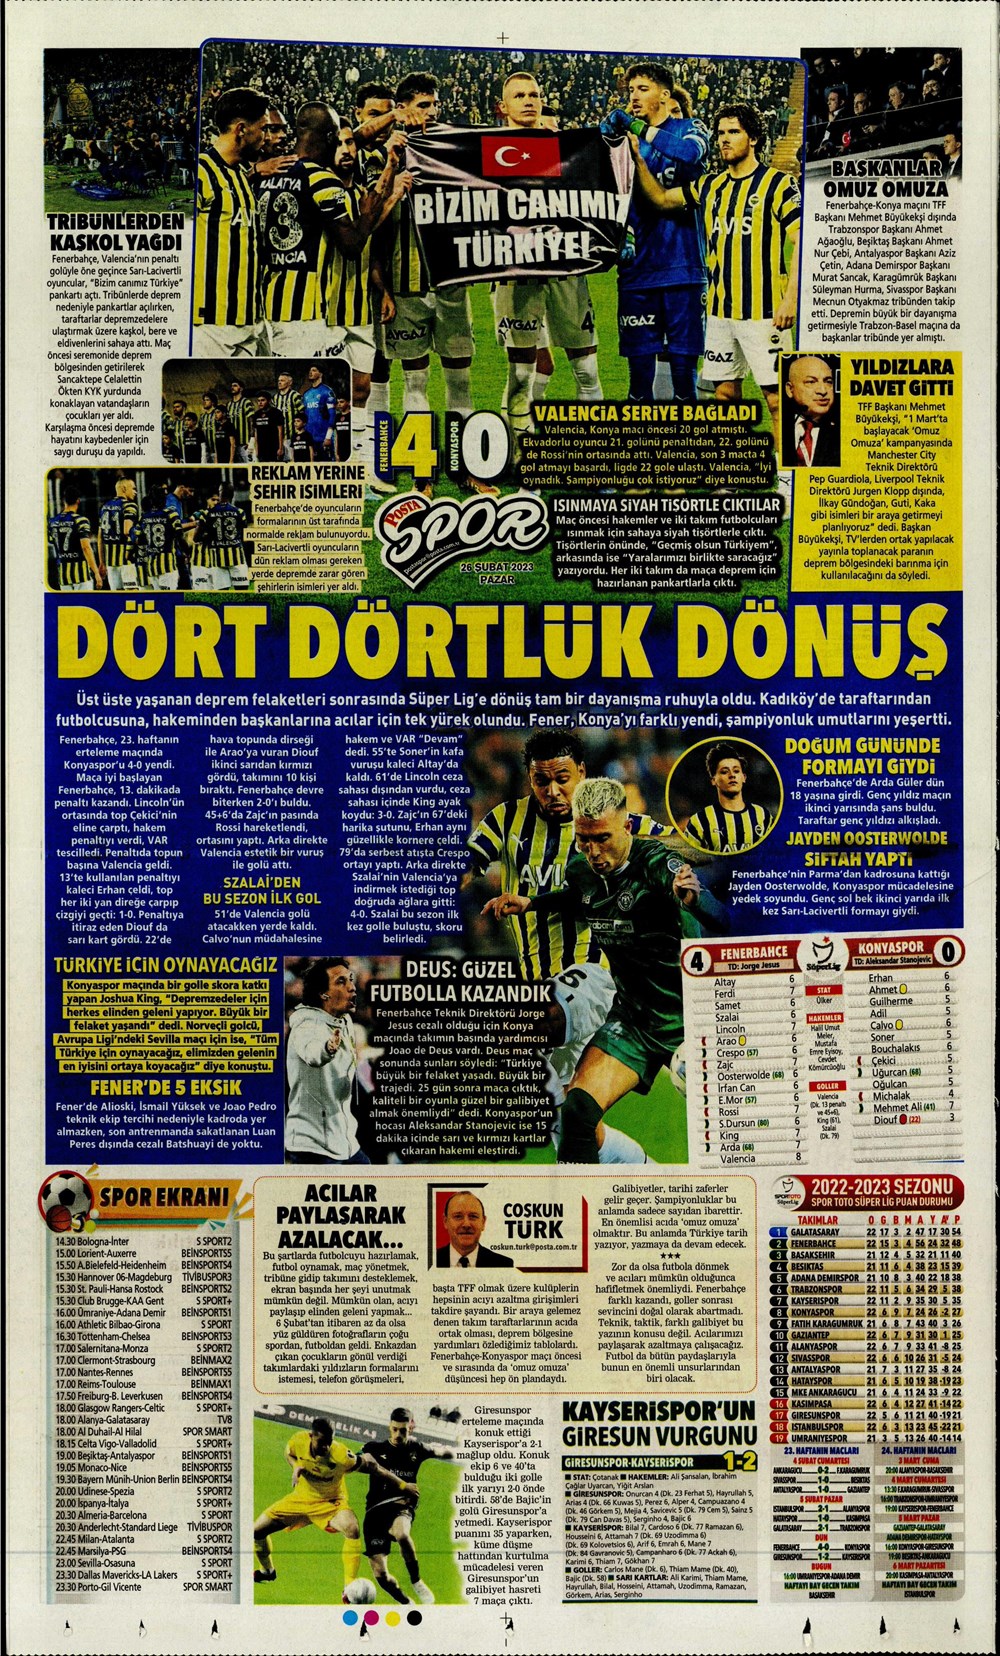 "Valenci'ağa' böyle istedi" - Sporun manşetleri  - 23. Foto